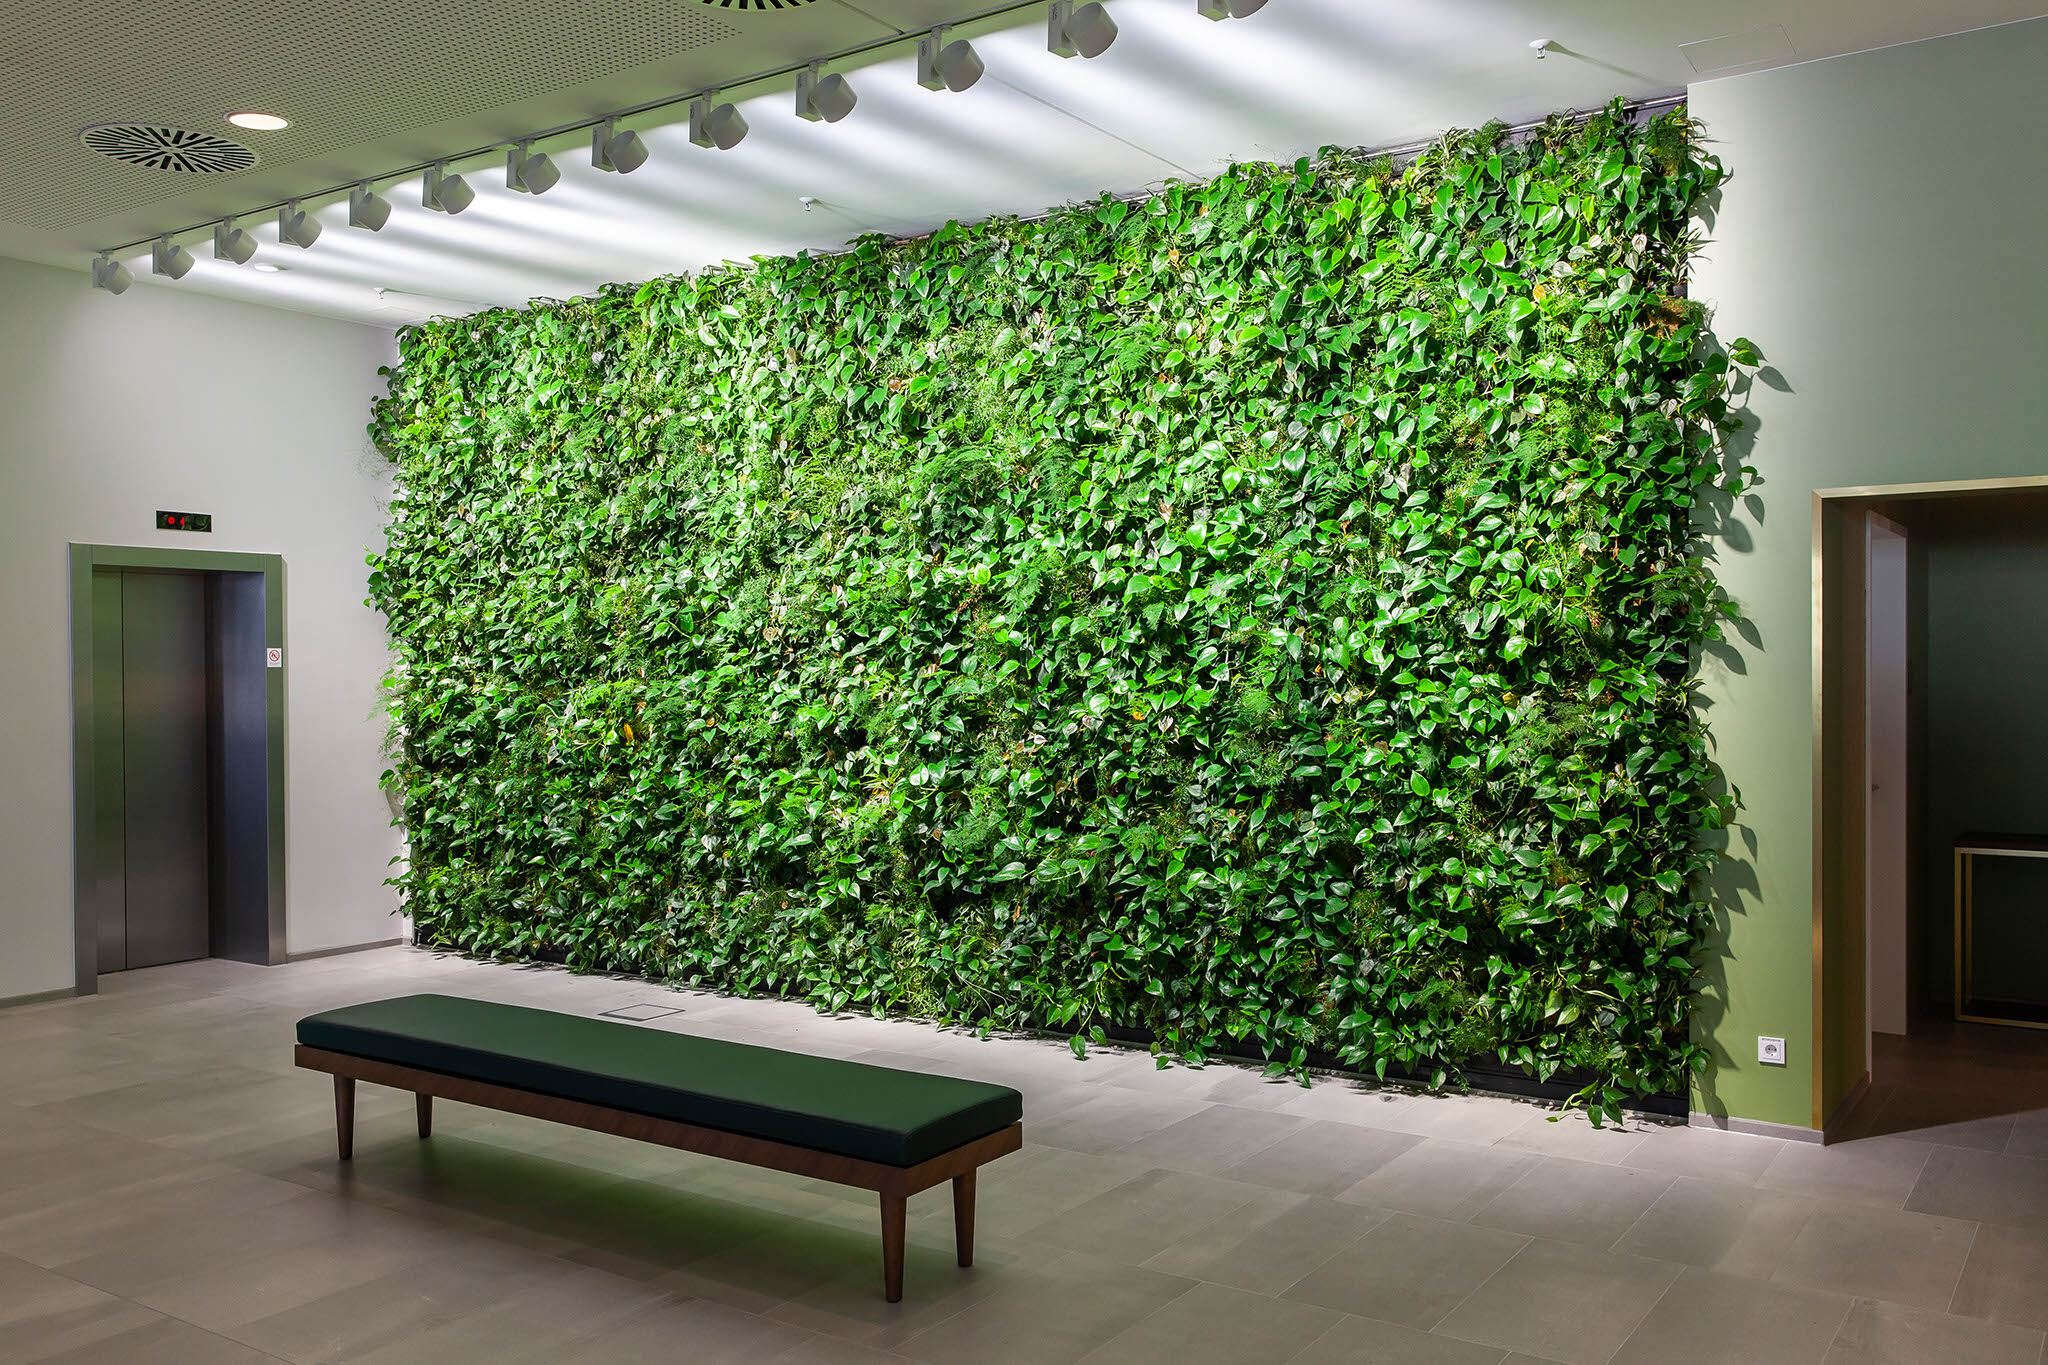 How do living green walls improve air quality?